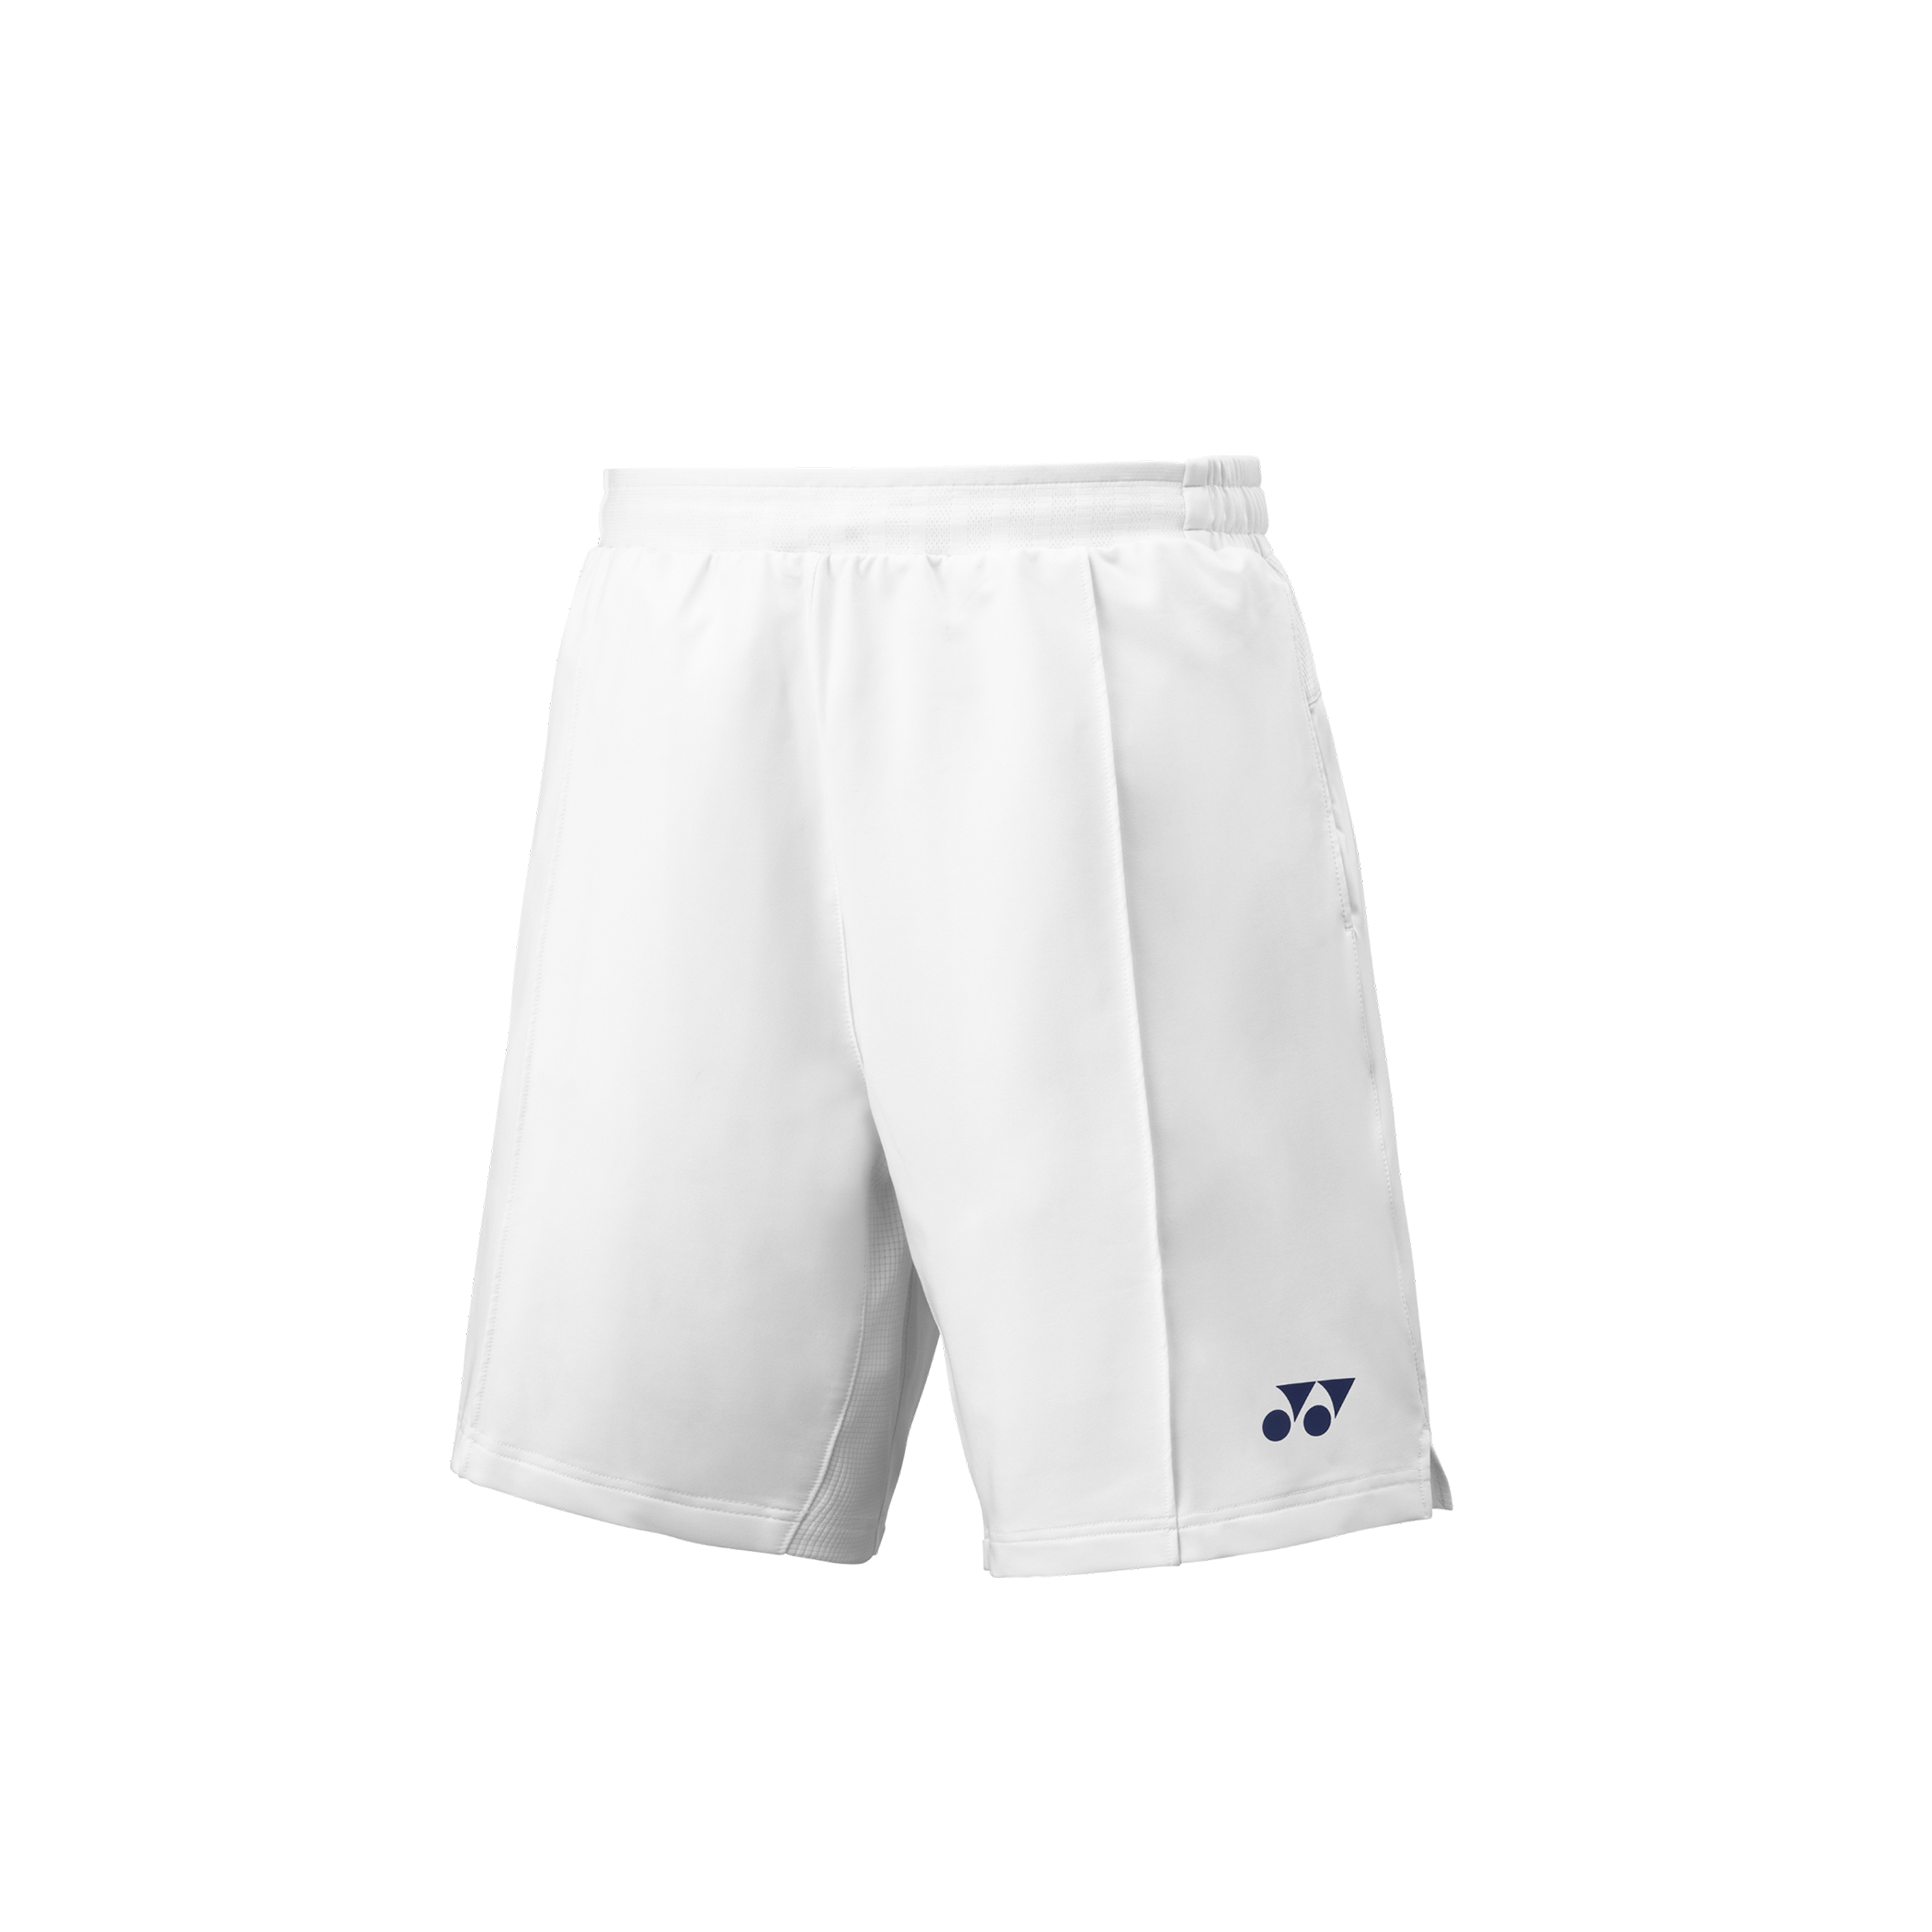 Yonex Premium Badminton/ Sports Shorts 15140 White MEN'S